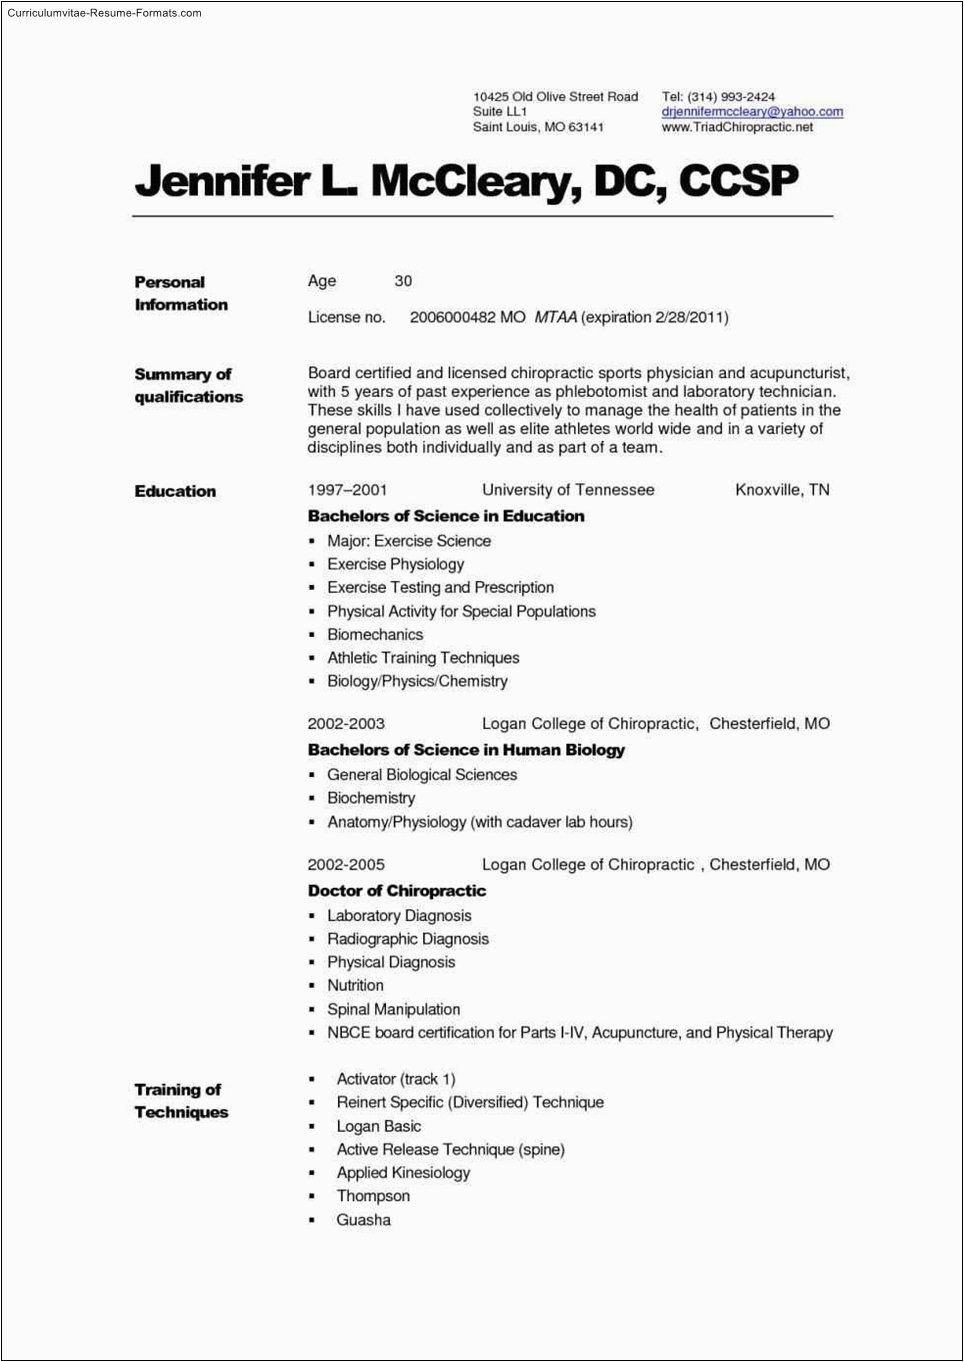 Sample Resume for Medical School Admission Medical School Resume Template